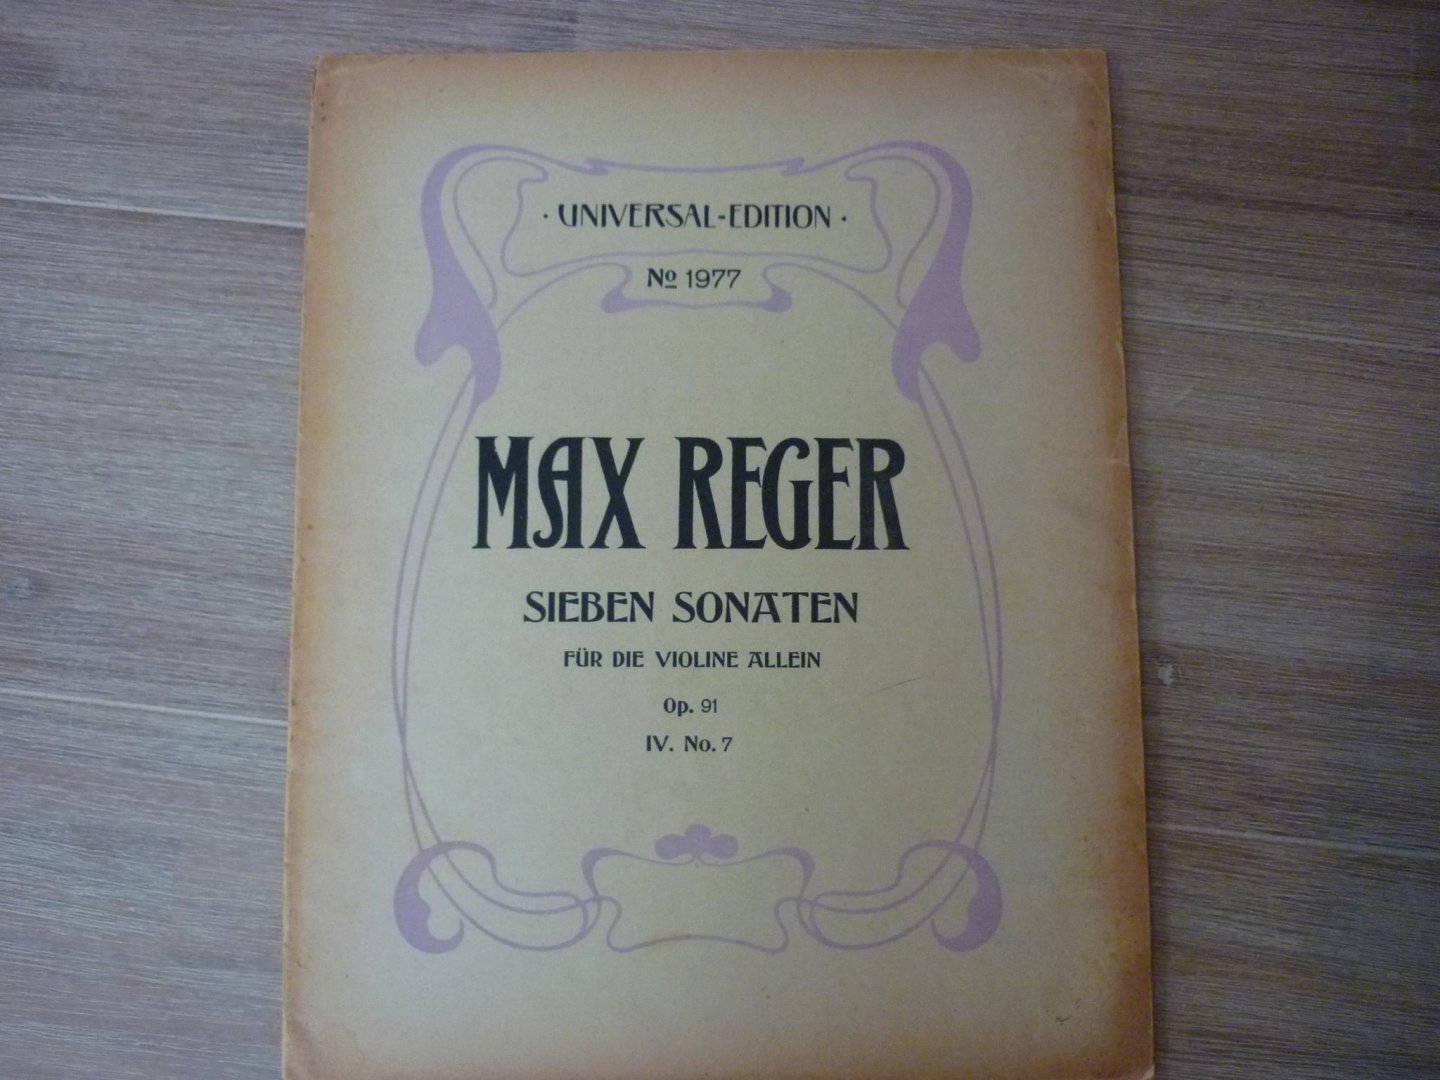 Reger; Max (1873 - 1916) - Sieben Sonaten op. 91; fur die violine allein; Boek sonate nr. 7 (VII)